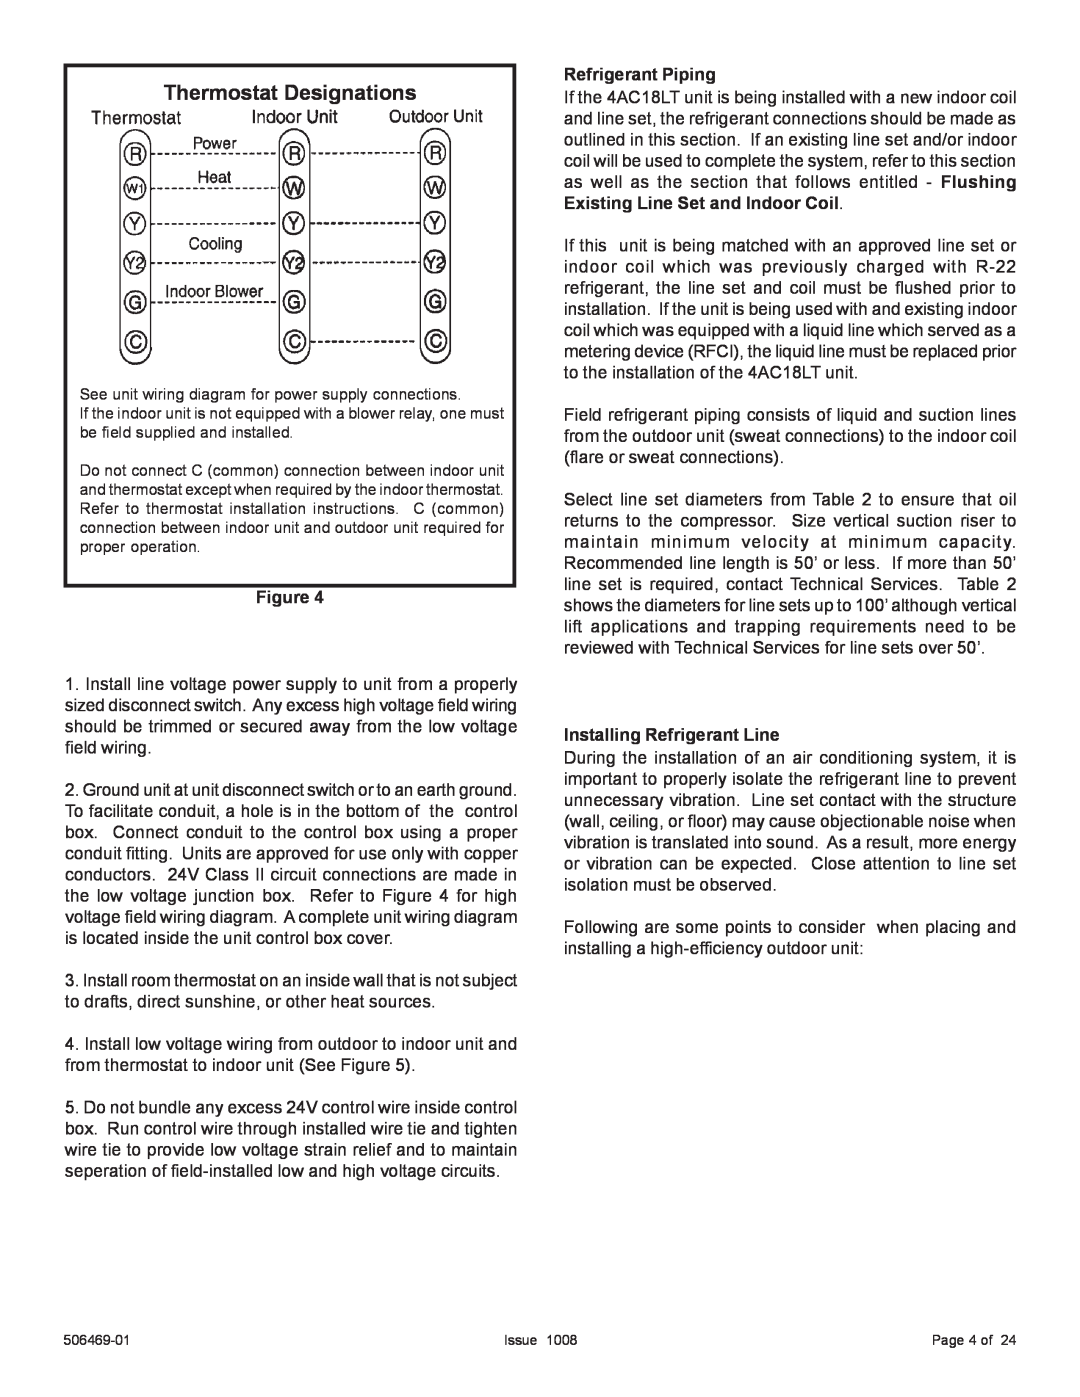 Allied Air Enterprises 4AC18LT manual Thermostat Designations, Refrigerant Piping, Installing Refrigerant Line 